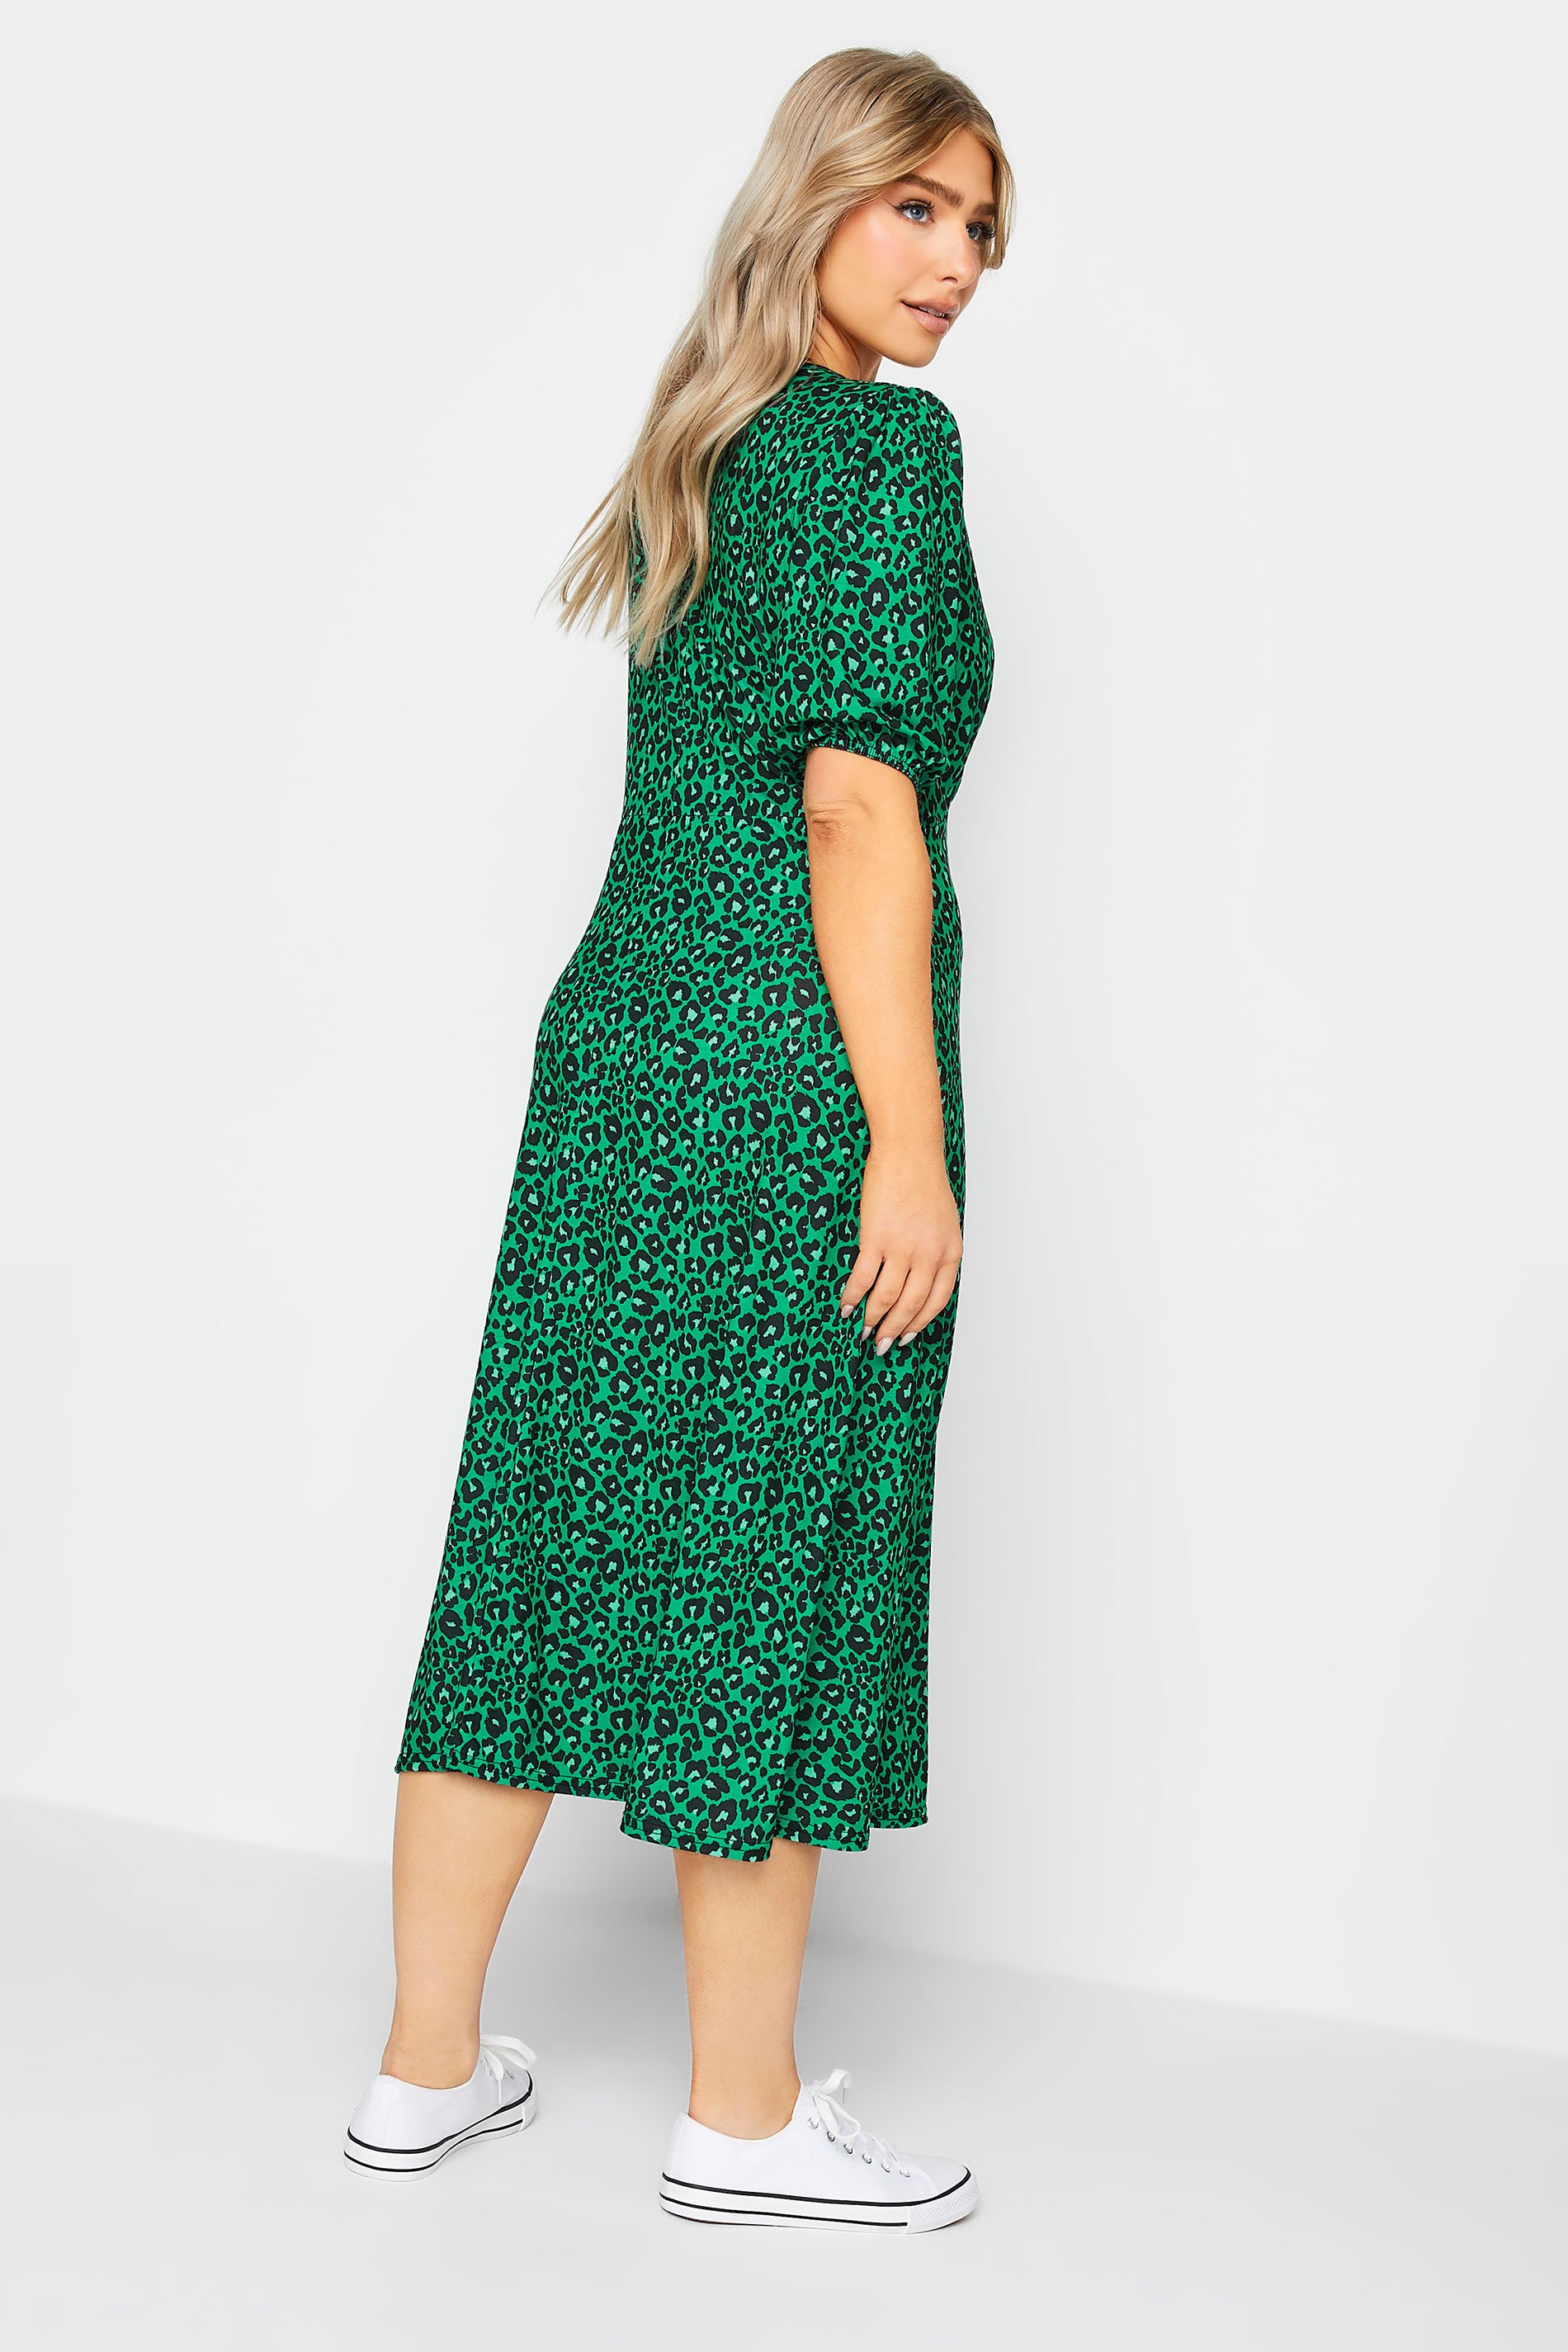 M&Co Green Leopard Print Dress | M&Co 3